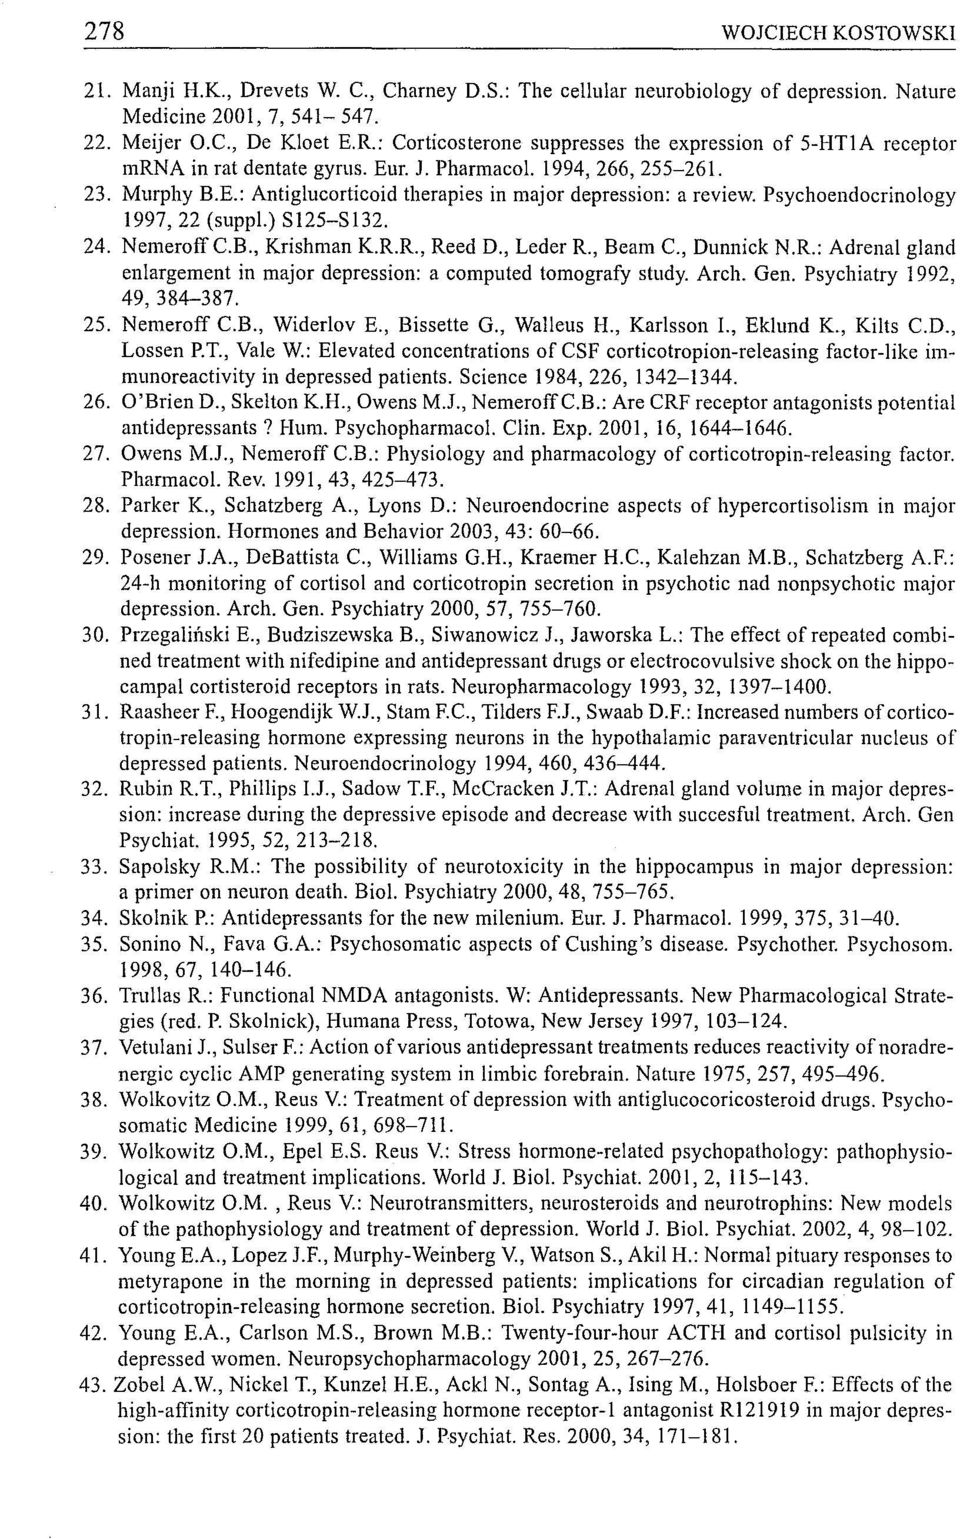 Psychoendocrinology 1997,22 (suppl.) SI25-S132. 24. Nemeroff C.B., Krishman K.R.R., Reed D., Leder R., Beam C., Dunnick N.R.: Adrenal gland enlargement in major depression: a computed tomografy study.